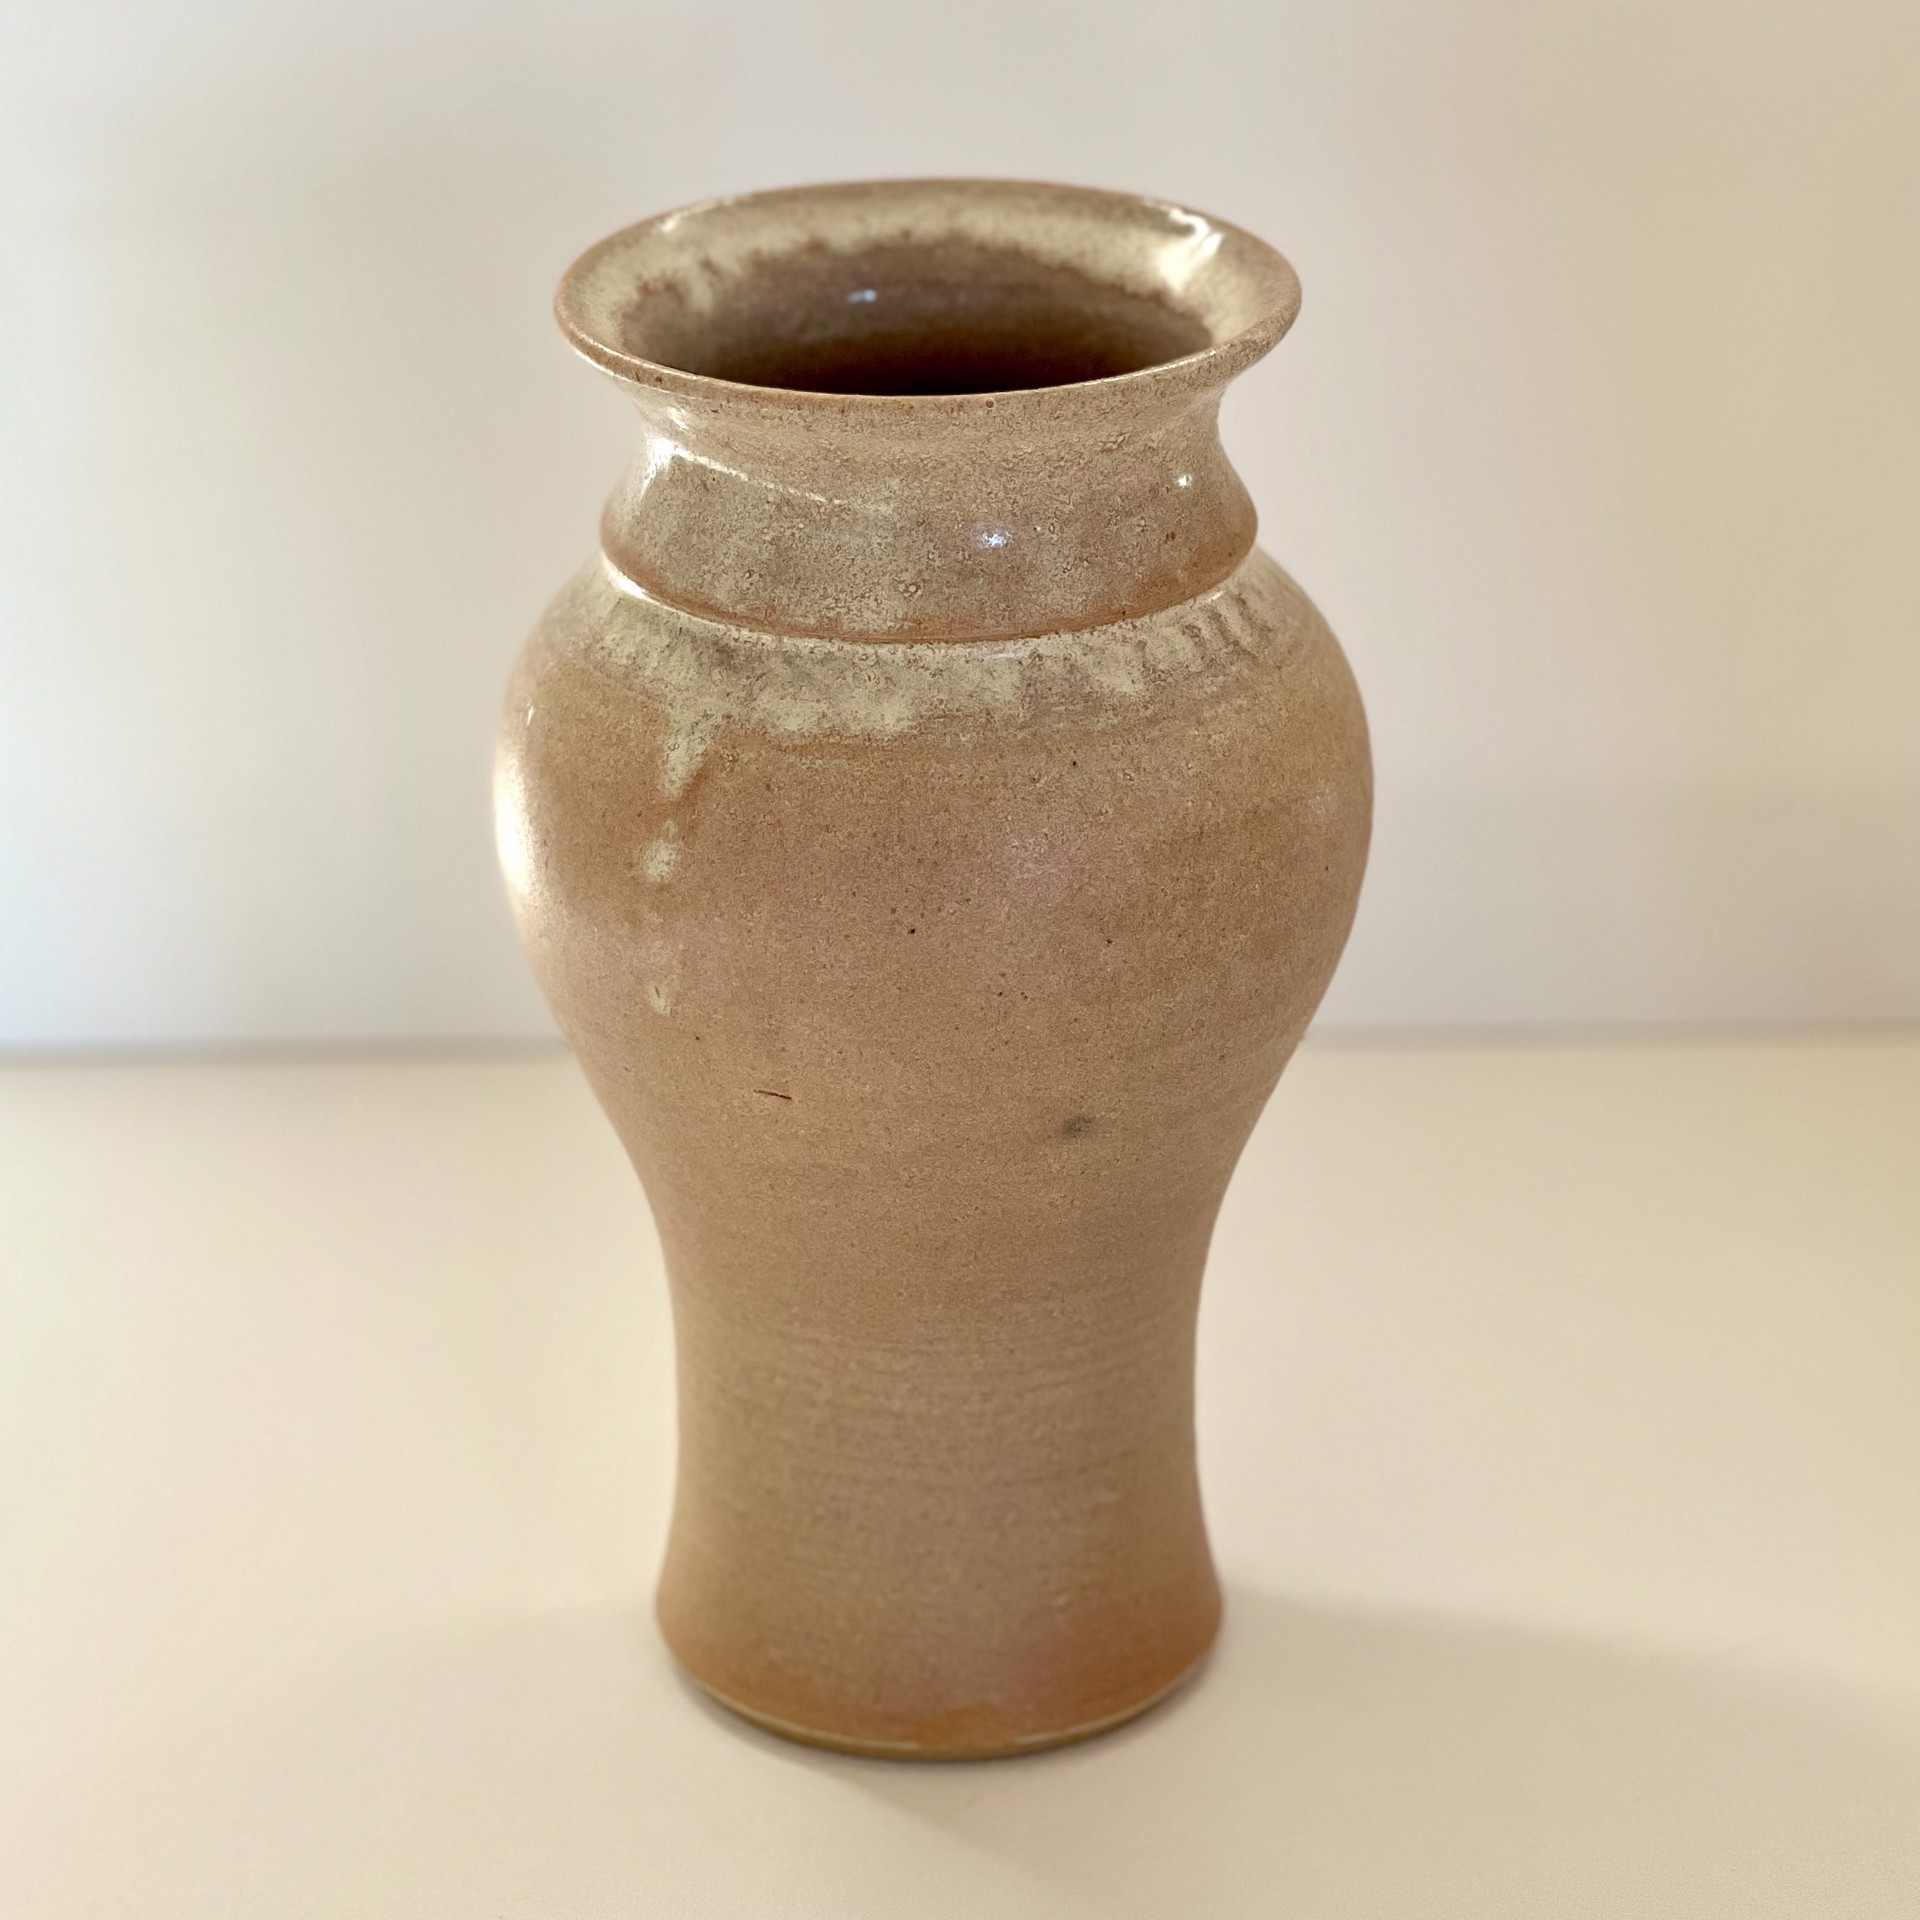 Vase 8 by David LaLomia